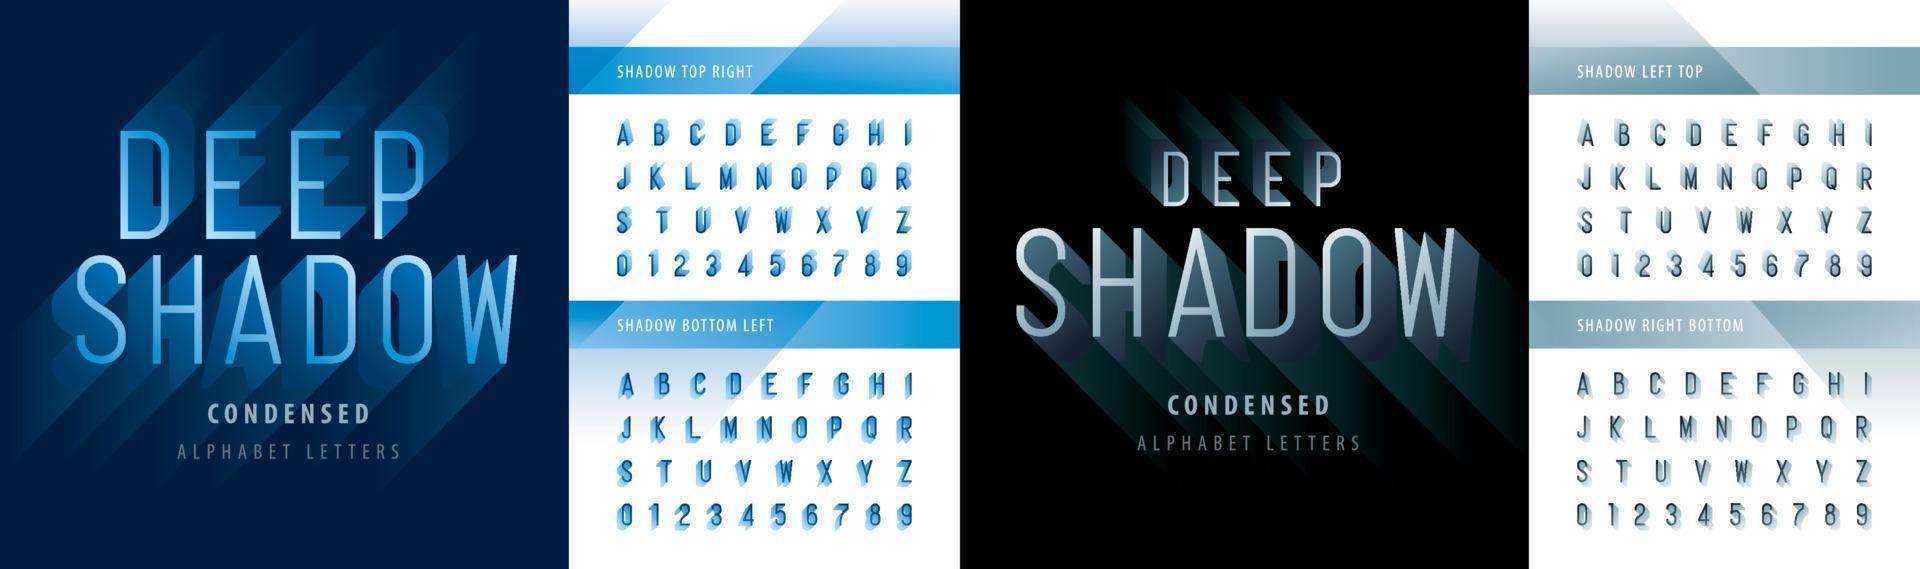 letras e números do alfabeto condensado de sombra profunda moderna vetor